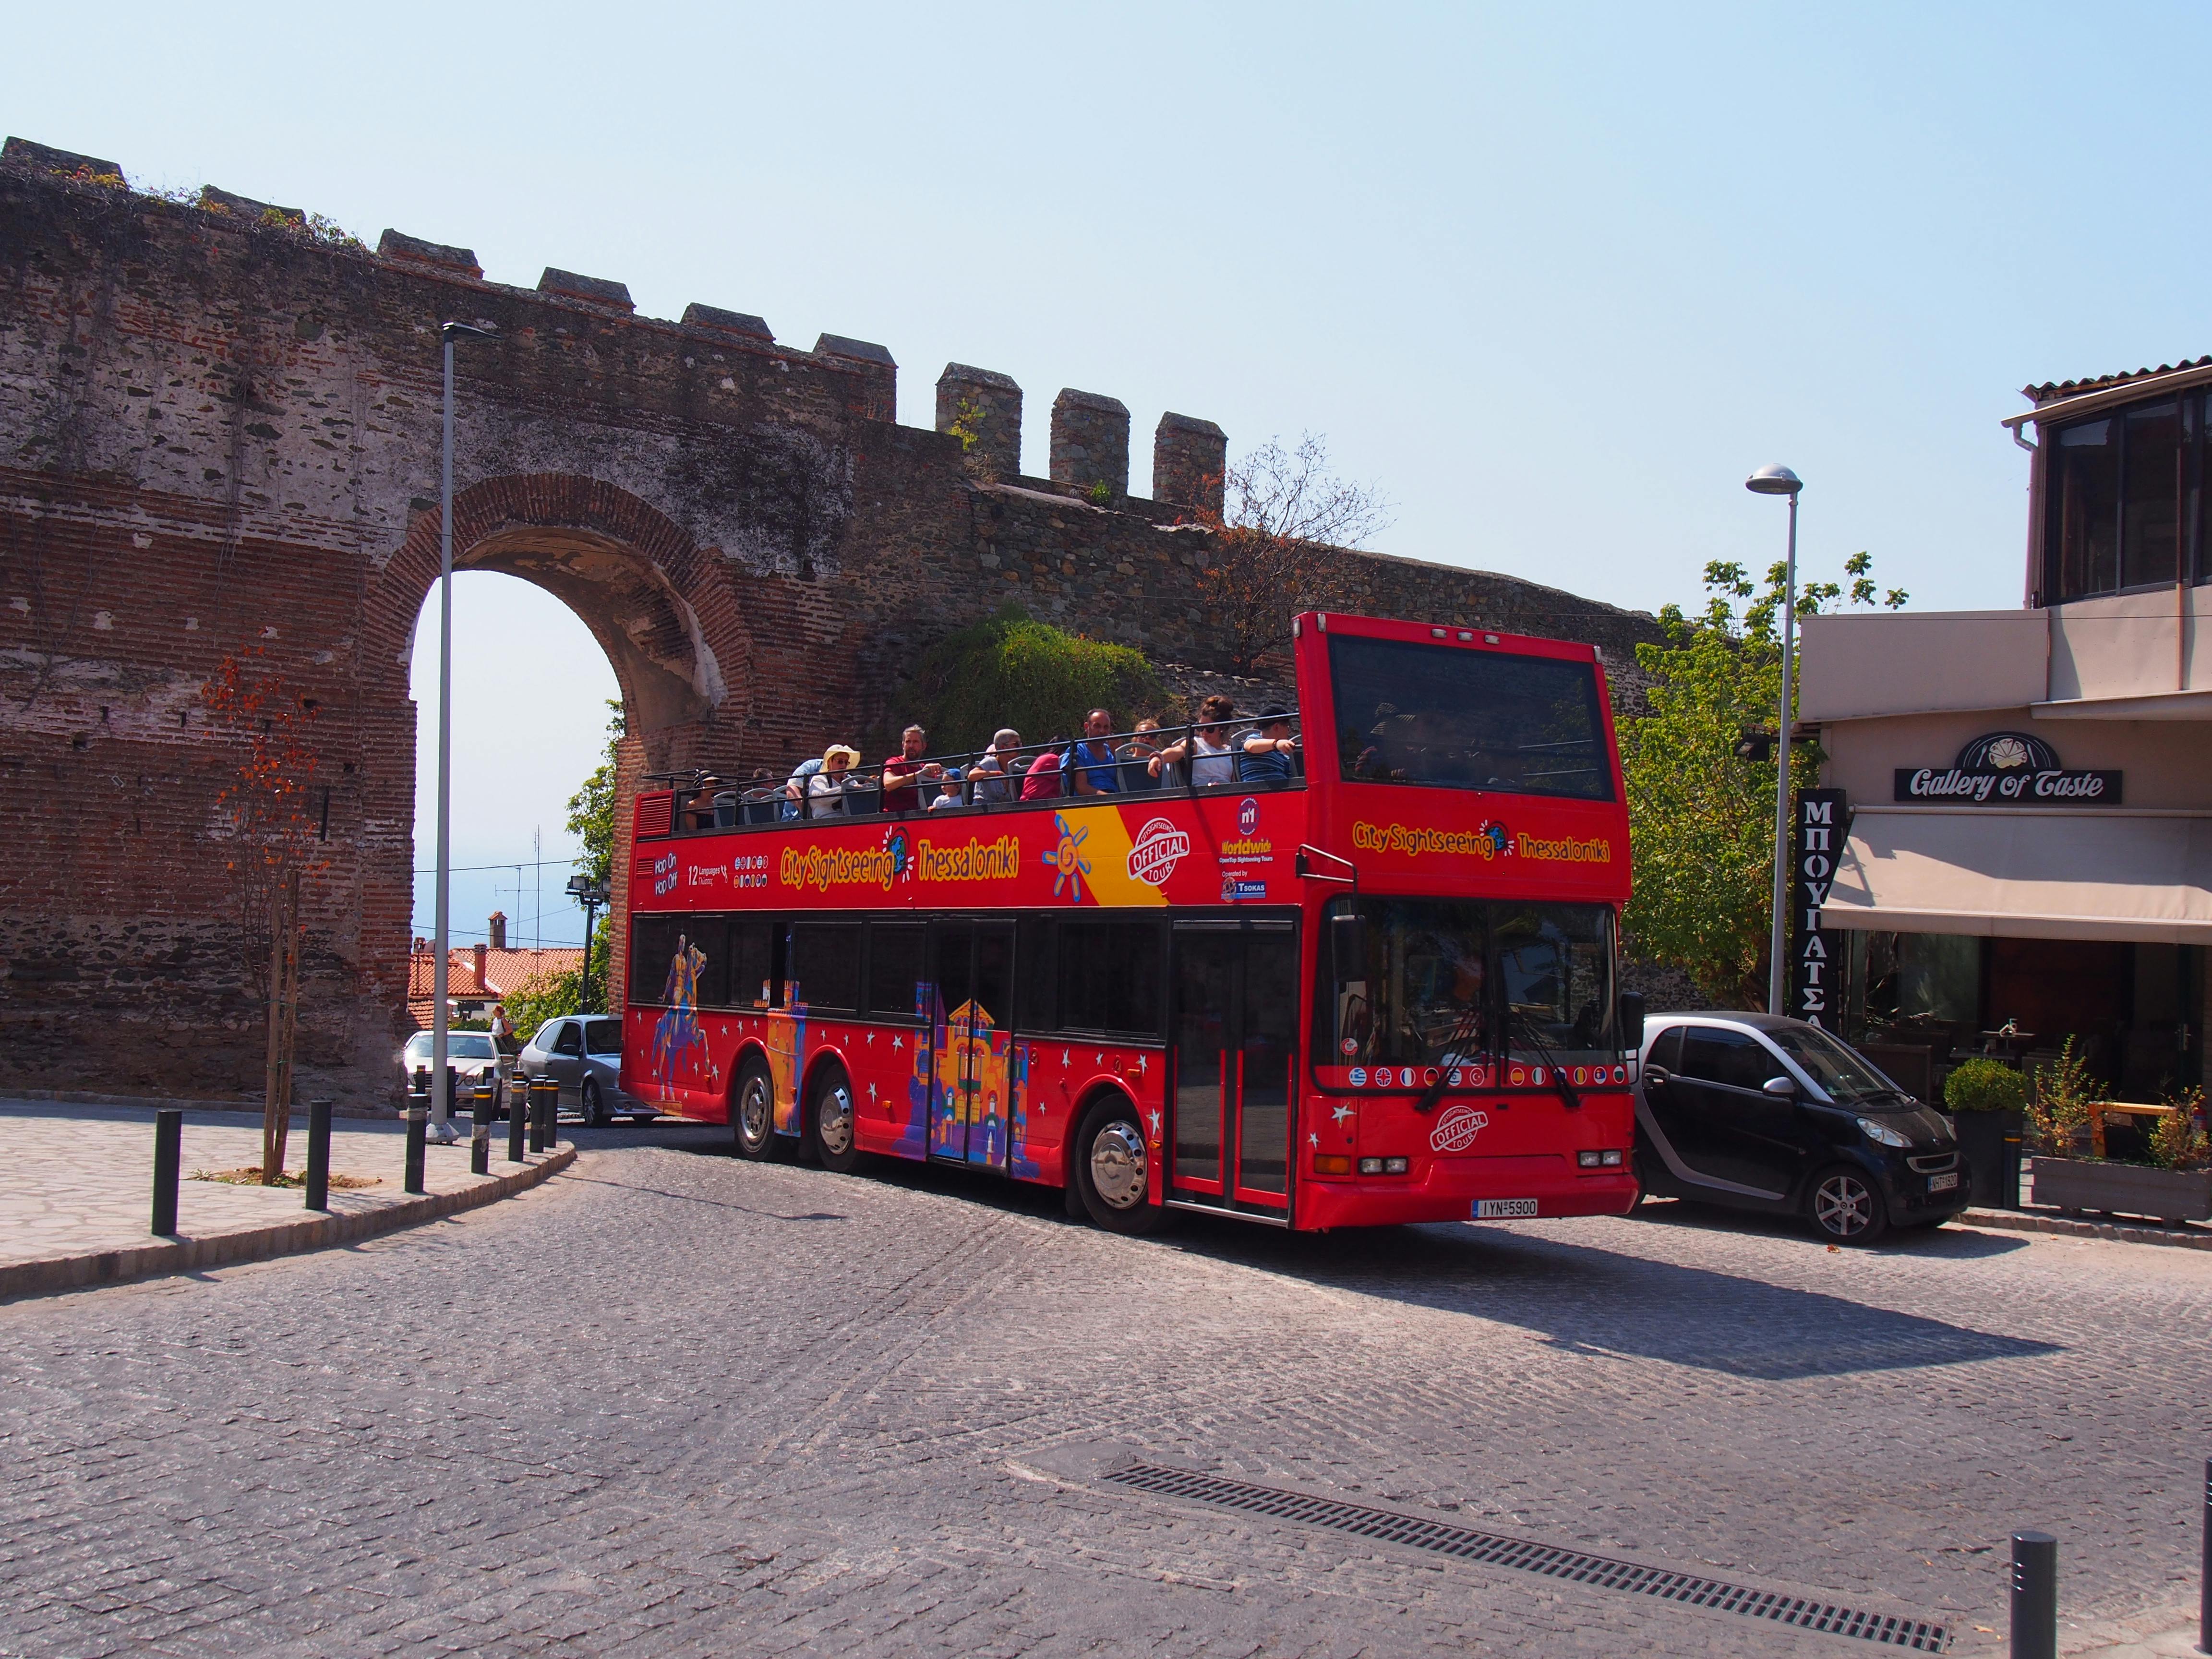 Wycieczka autobusowa po Salonikach typu hop-on hop-off City Sightseeing